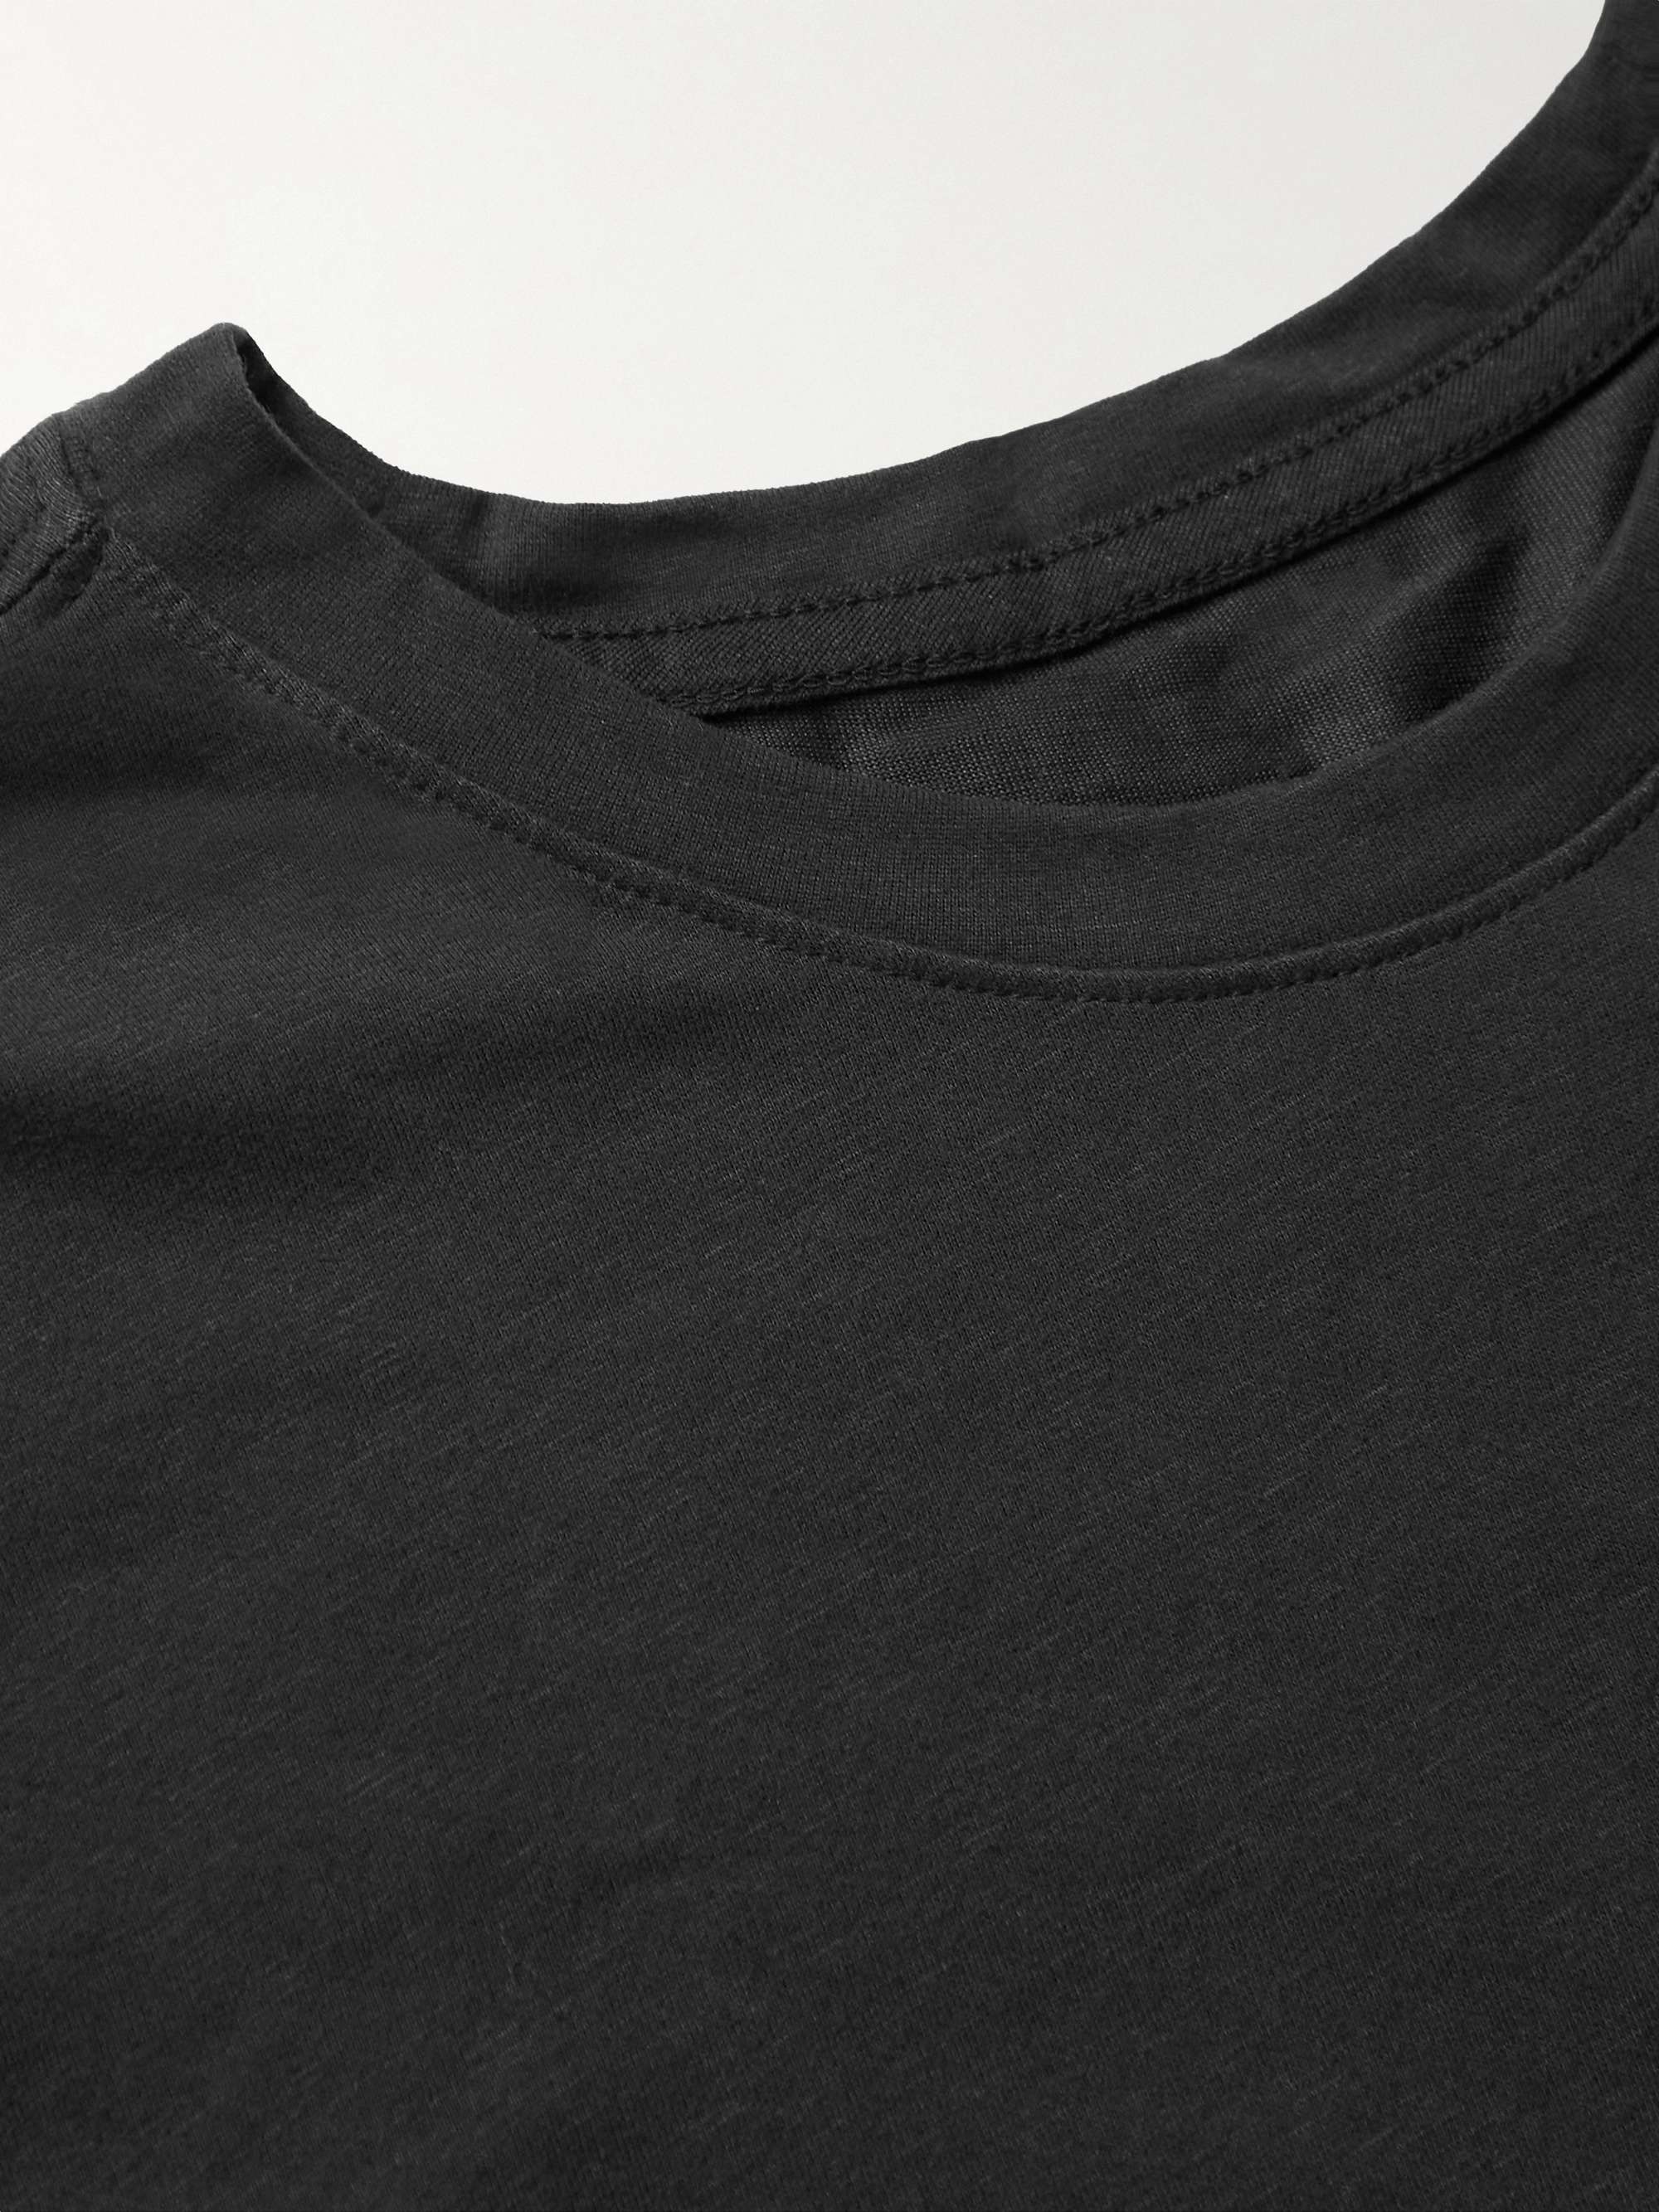 NIKE TRAINING Logo-Print Dri-FIT Cotton-Blend Jersey T-Shirt